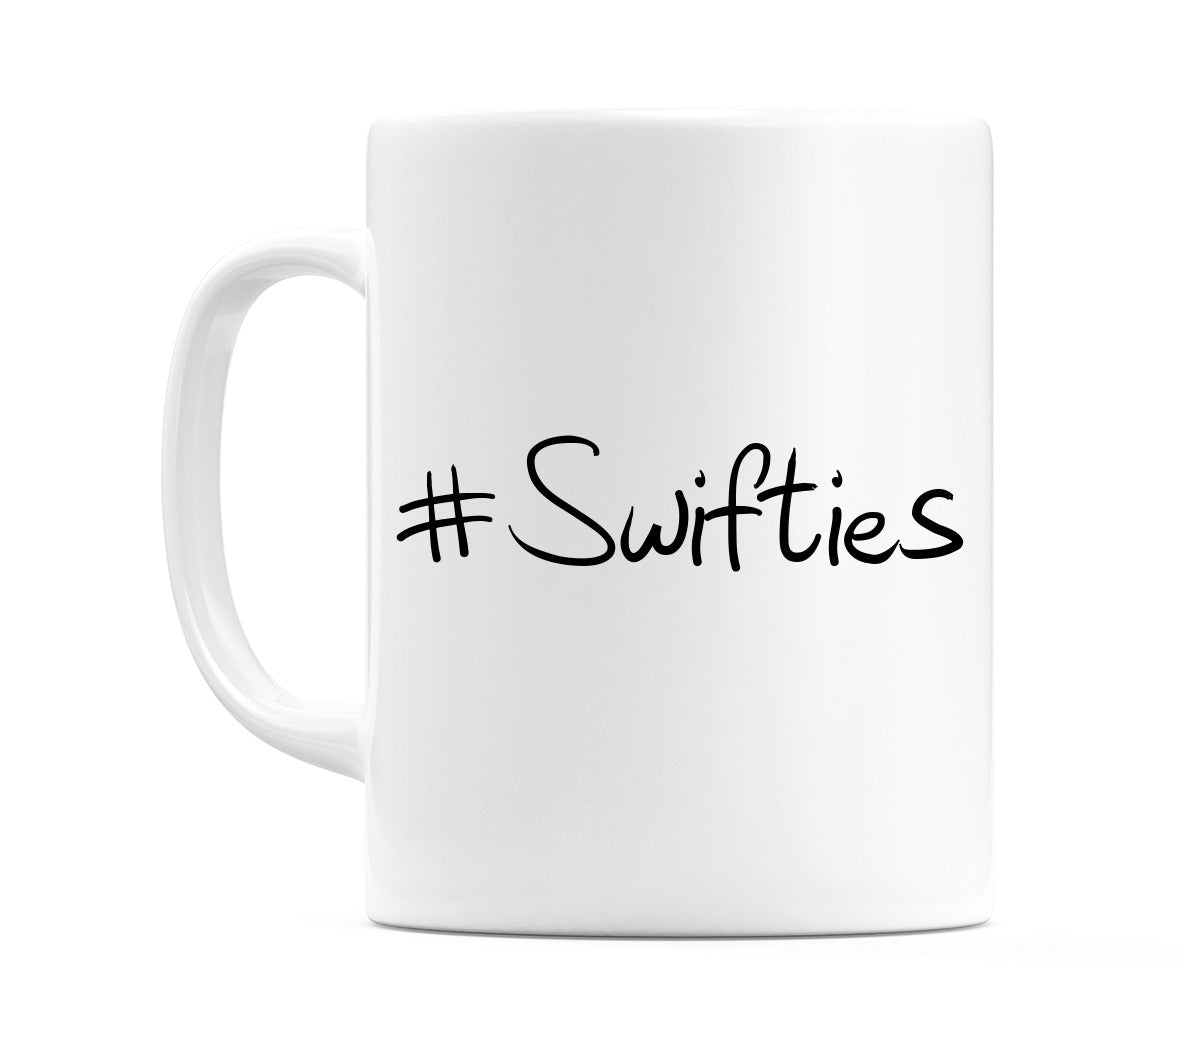 #Swifties Mug